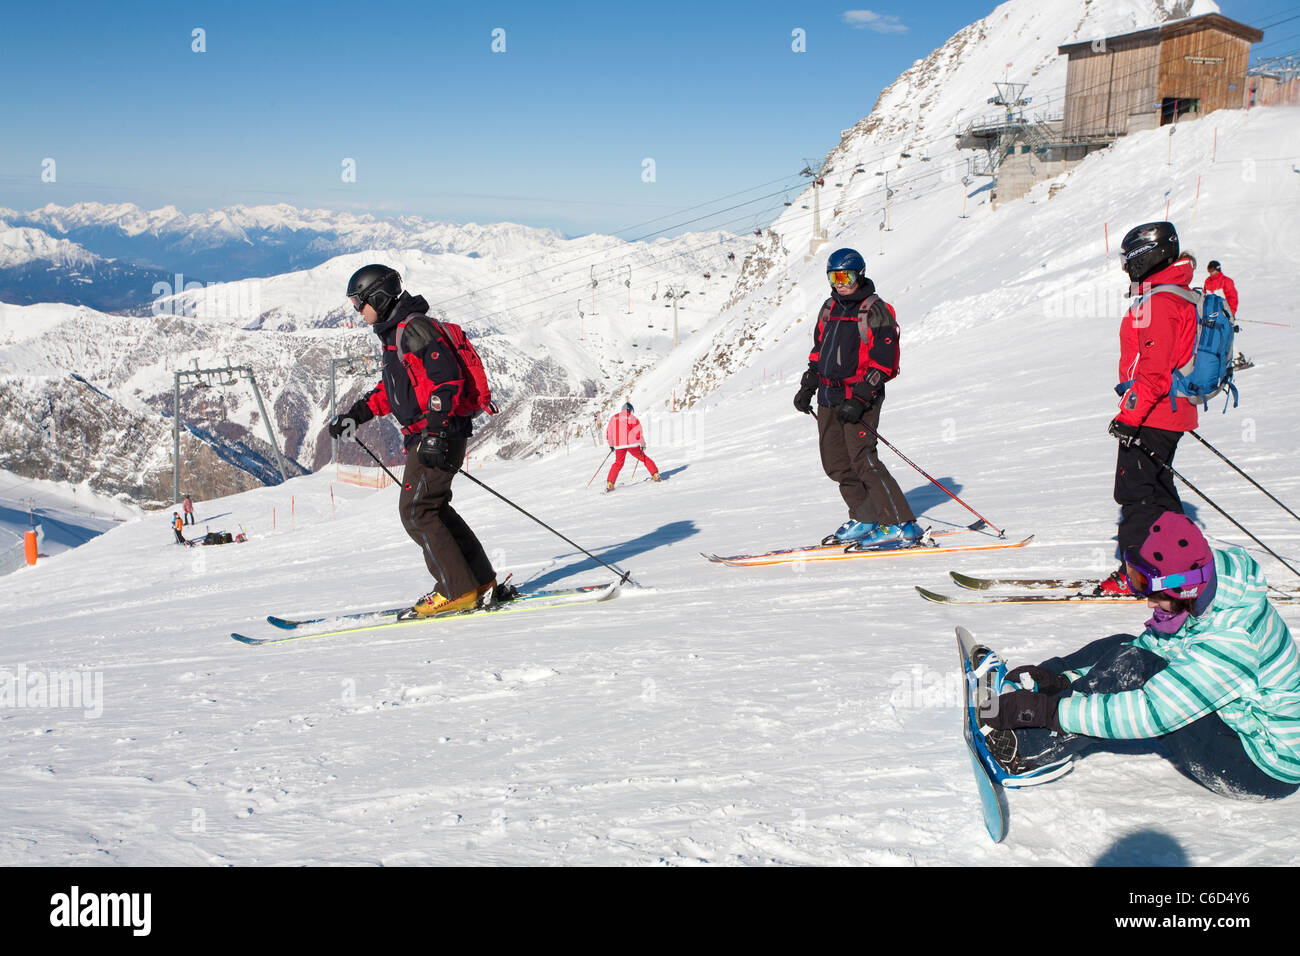 Skifahrer und Hintertuxer Gletscher am Snowboarder, skieur et snowboarder au glacier de Hintertux Banque D'Images